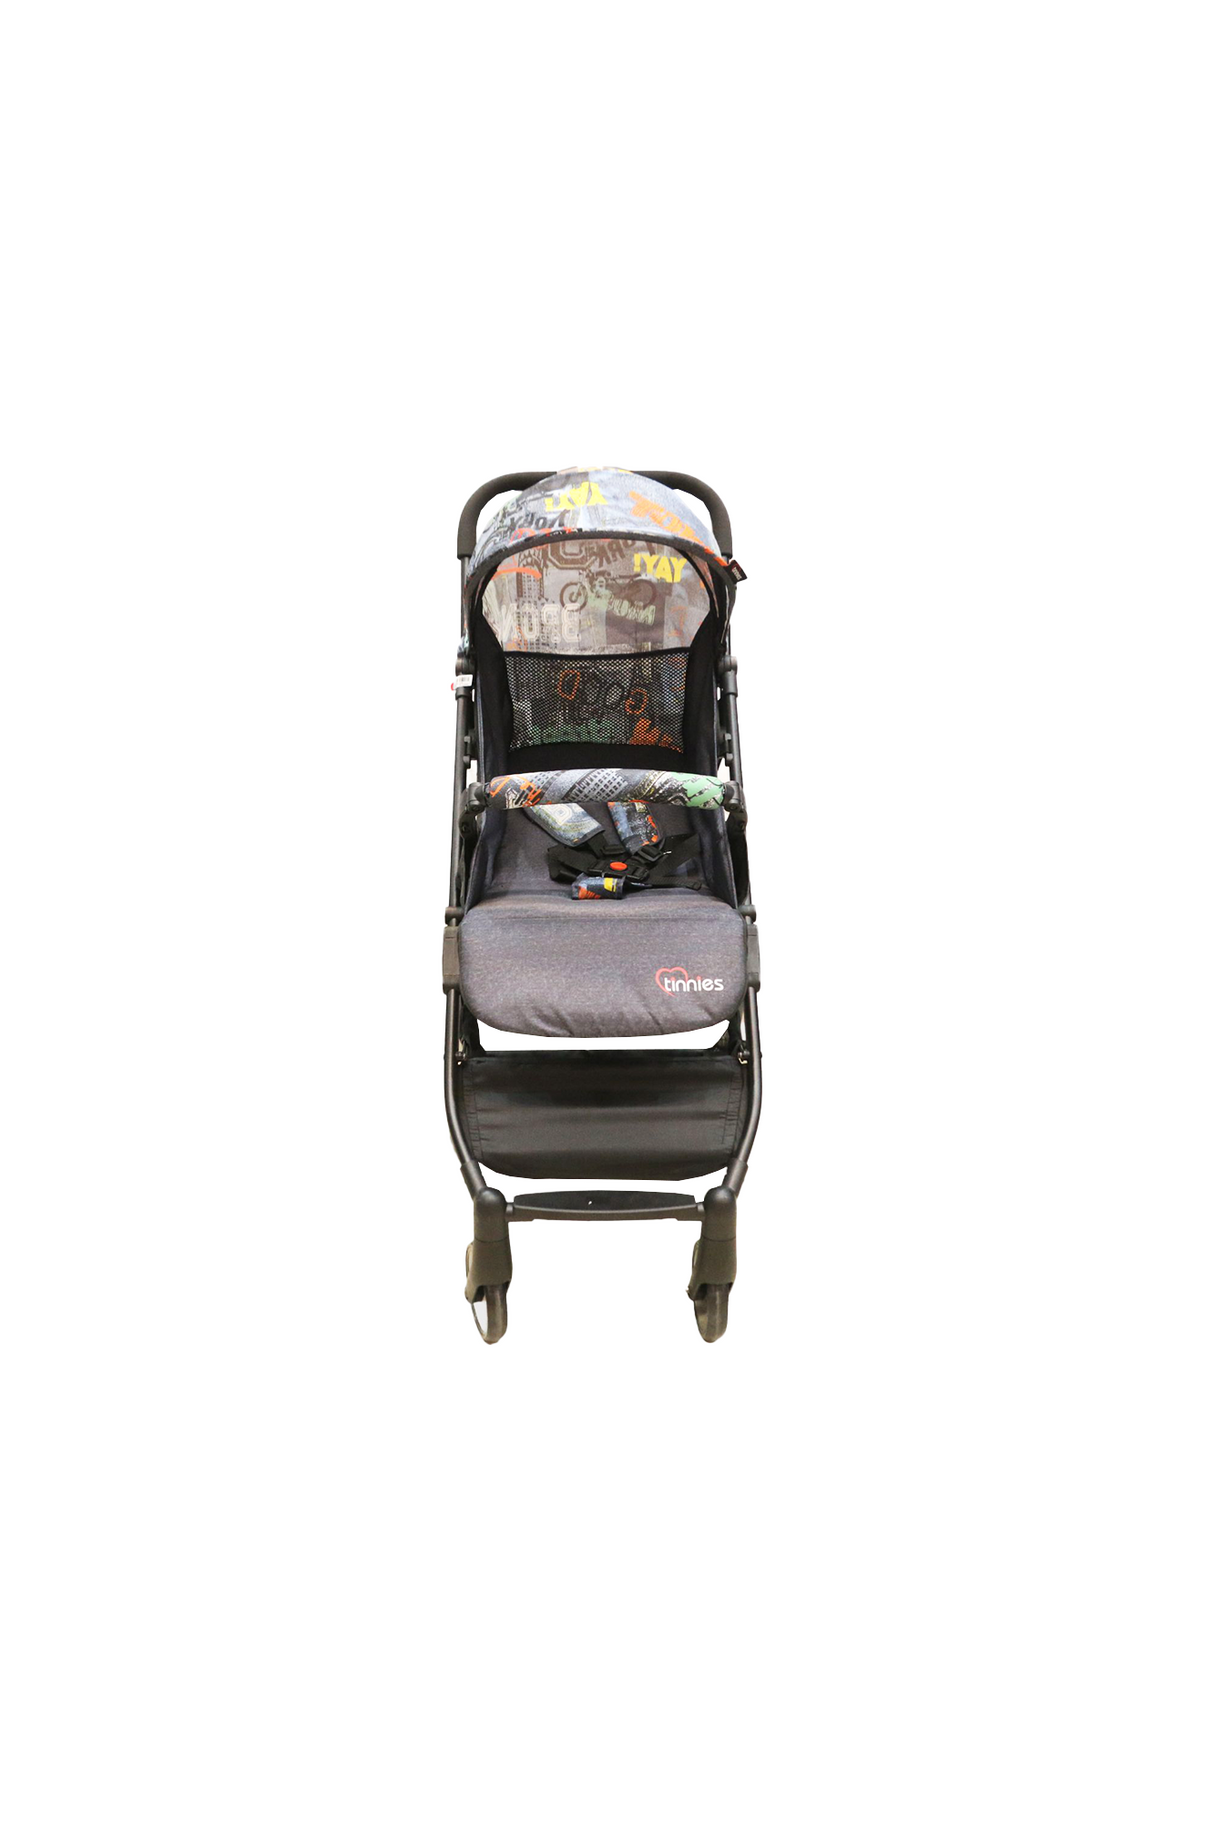 tinnies baby stroller tc-3